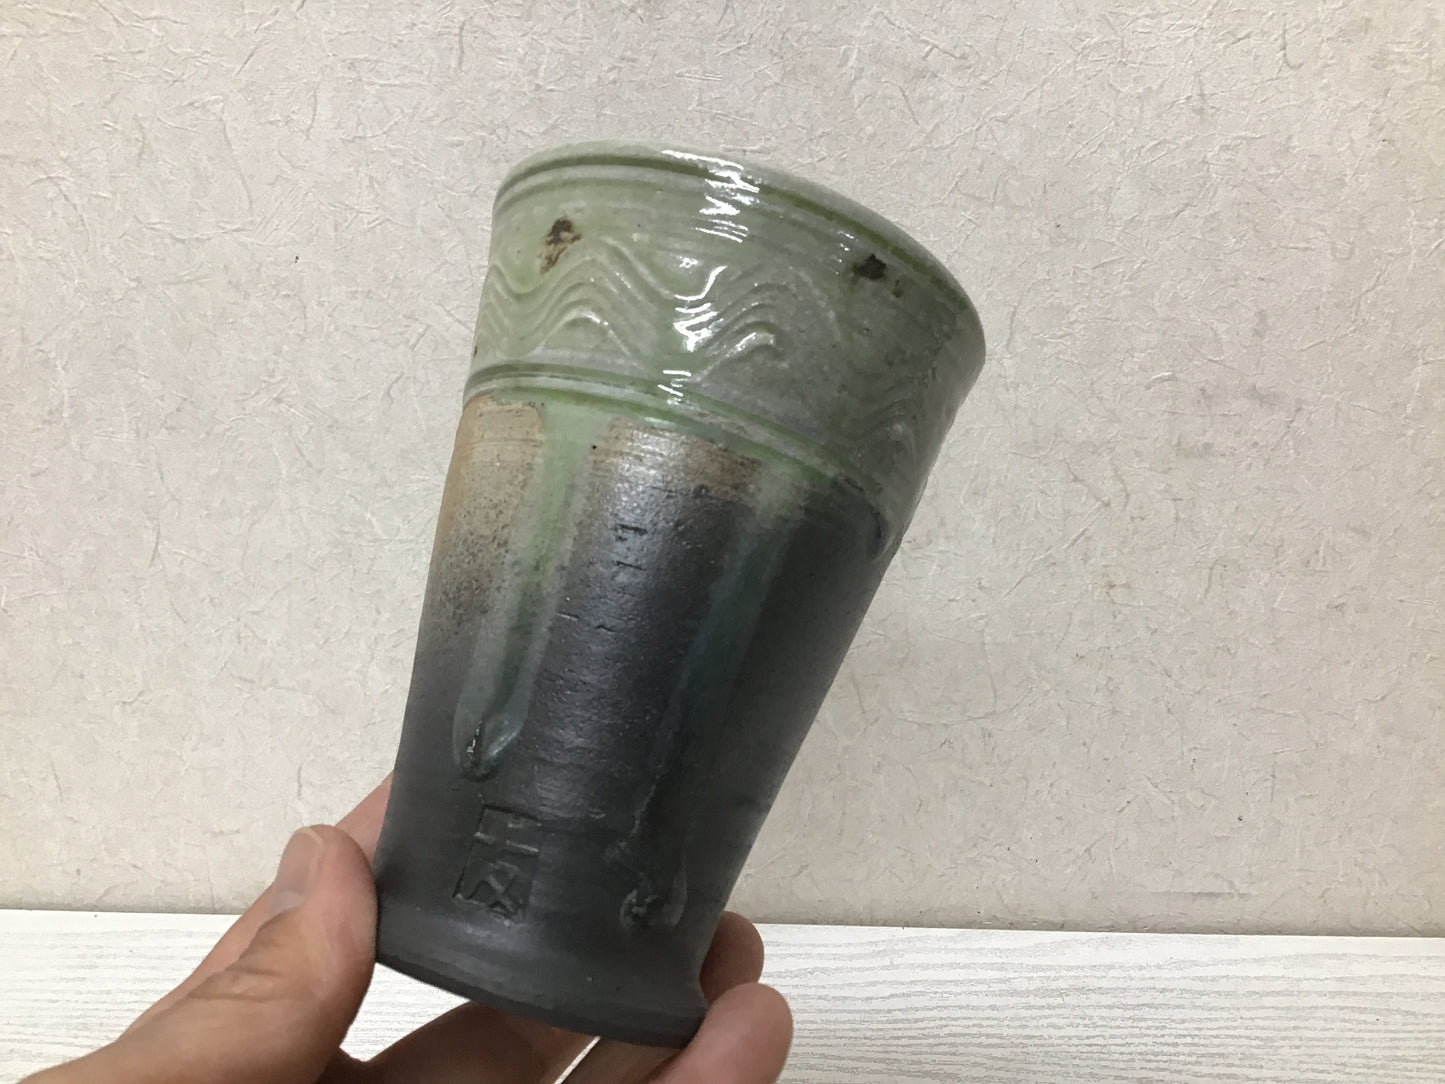 Y2728 CUP Mino-ware Beer Mug signed box glassware Japanese antique tableware